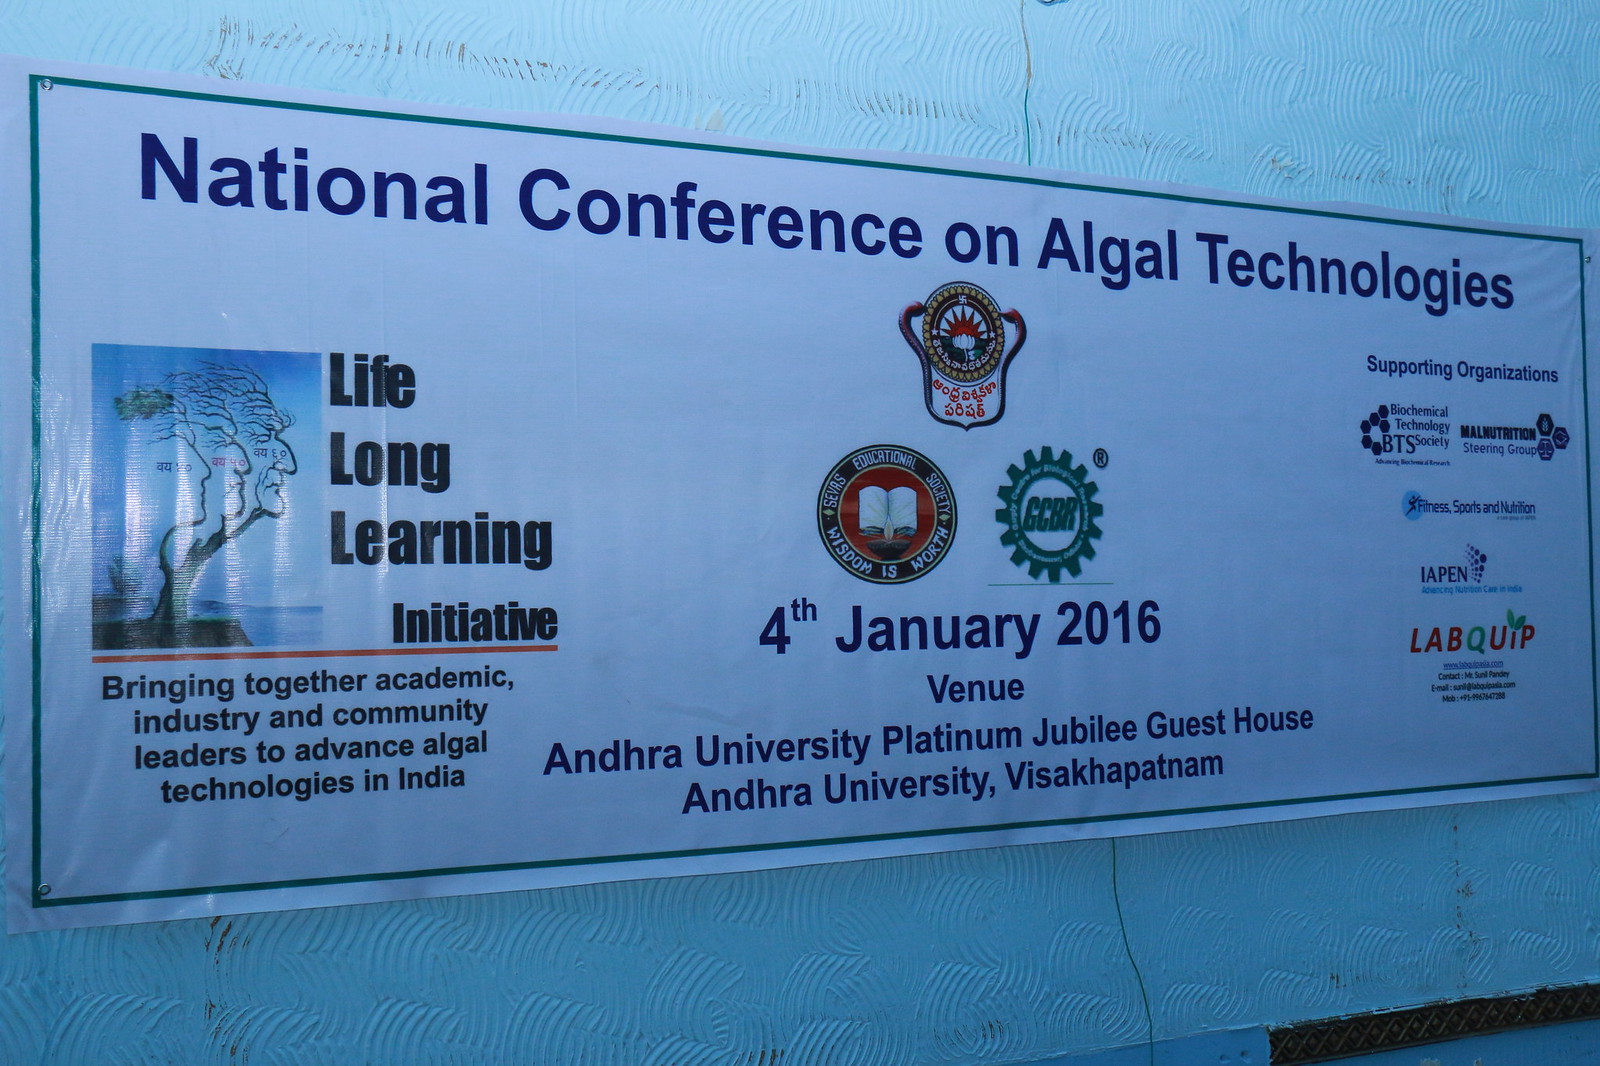 National Conference on Algal Technologies, January 4th, 2016, Visakhapatnam, Andhra Pradesh, India